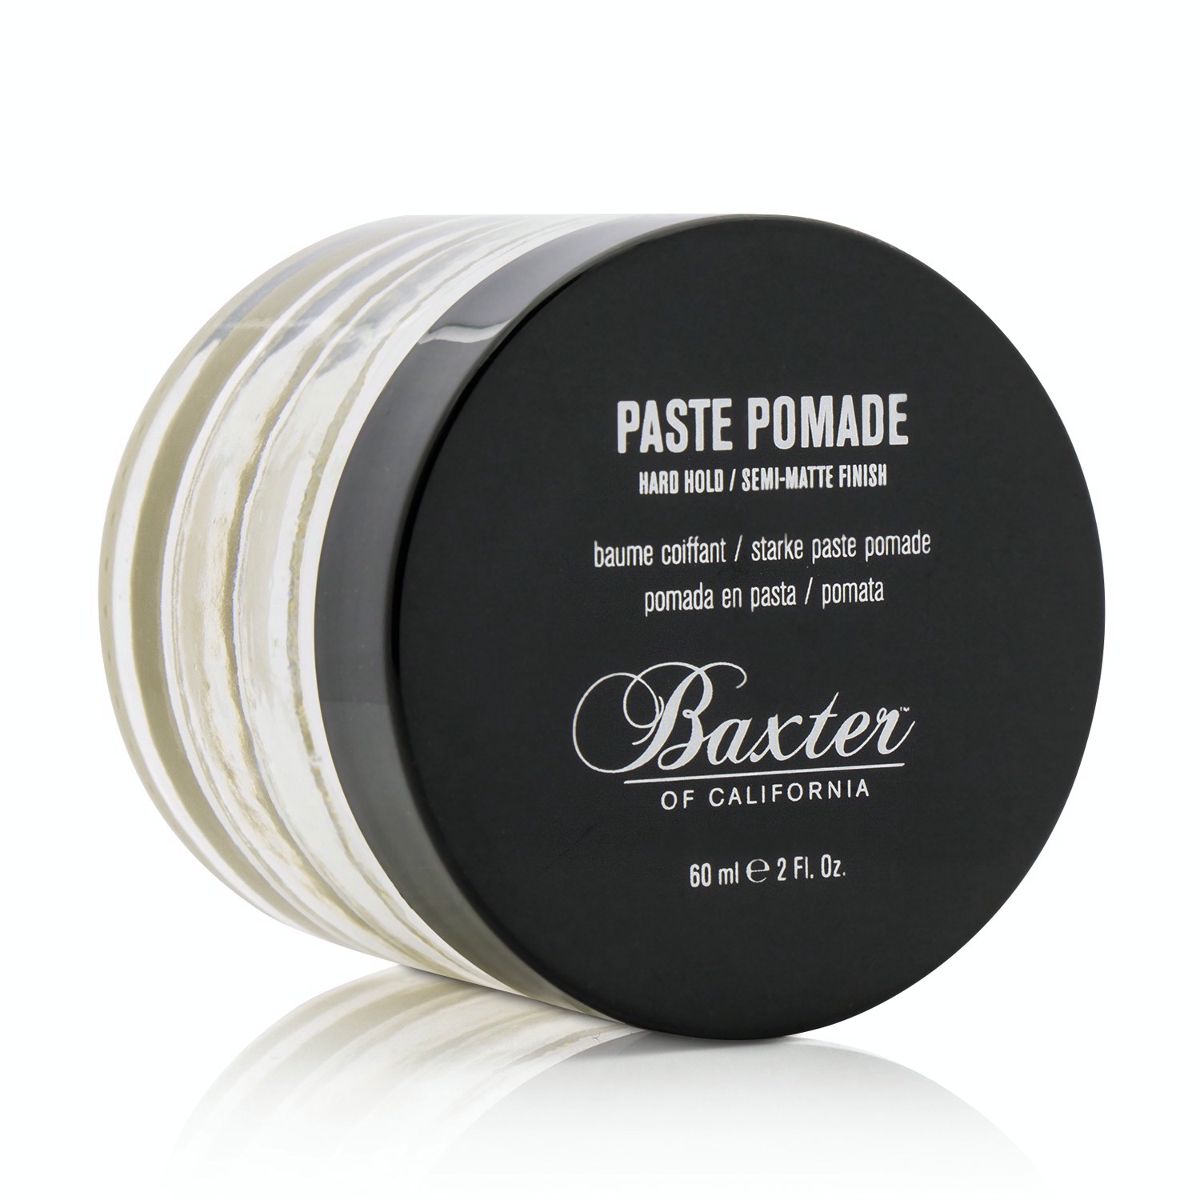 Paste Pomade (Hard Hold/ Semi-Matte Finish) Baxter Of California Image